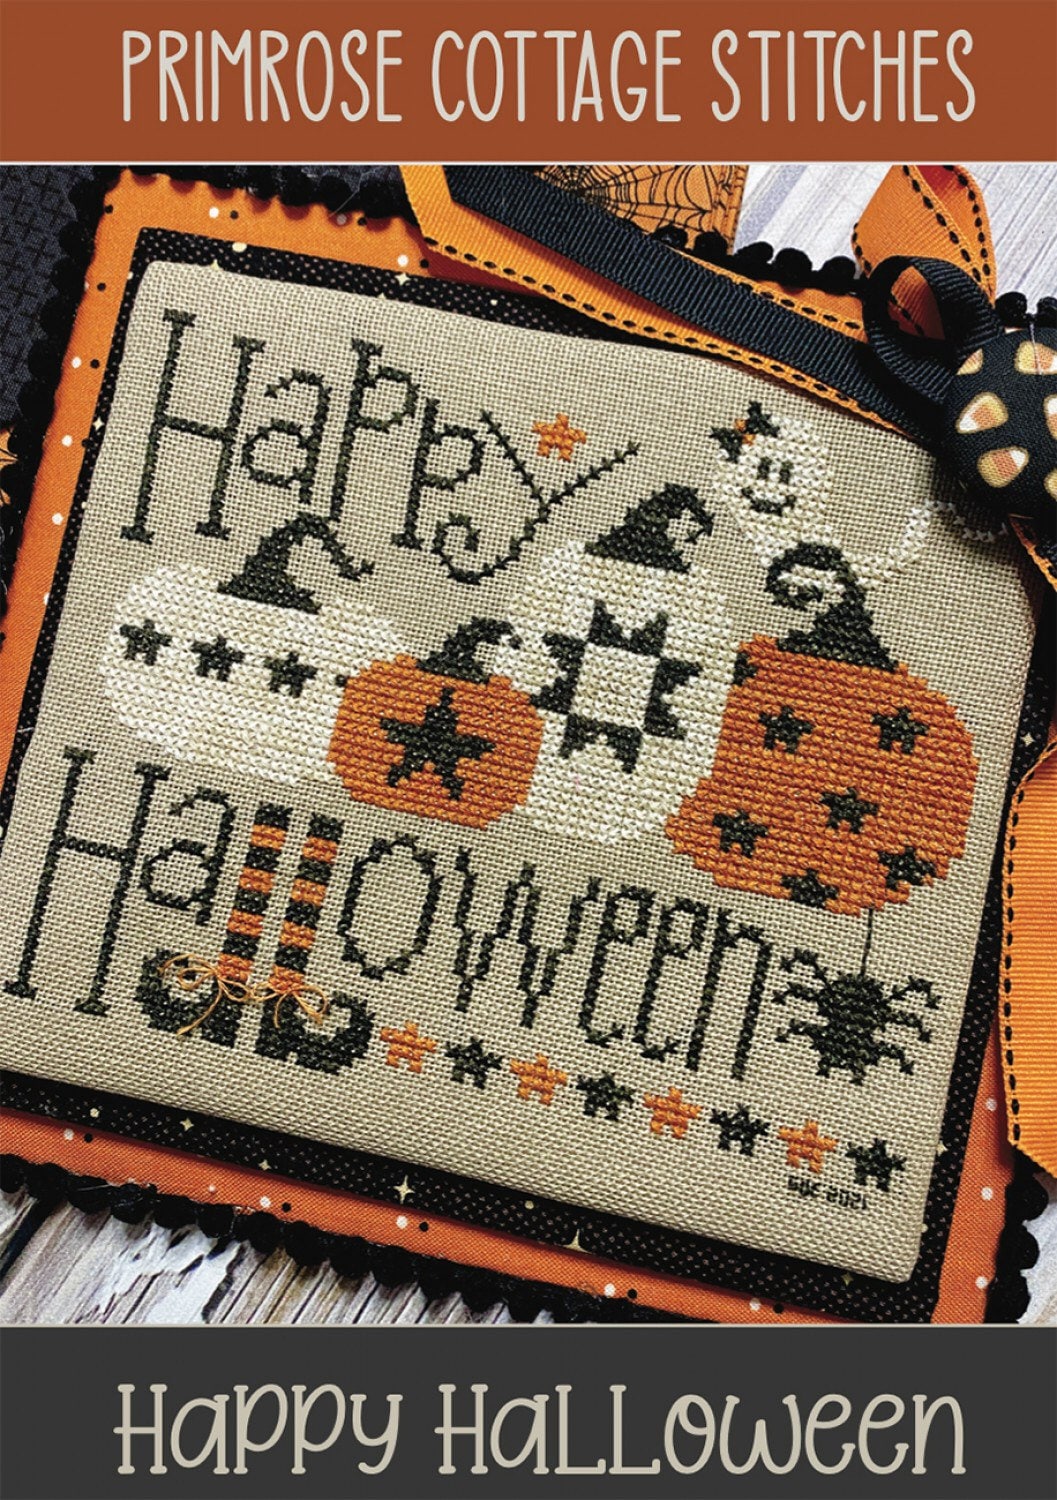 Happy Halloween Cross Stitch Pattern - Primrose Cottage Stitches - 82 x 68 stitches - Halloween Cross Stitch Pattern